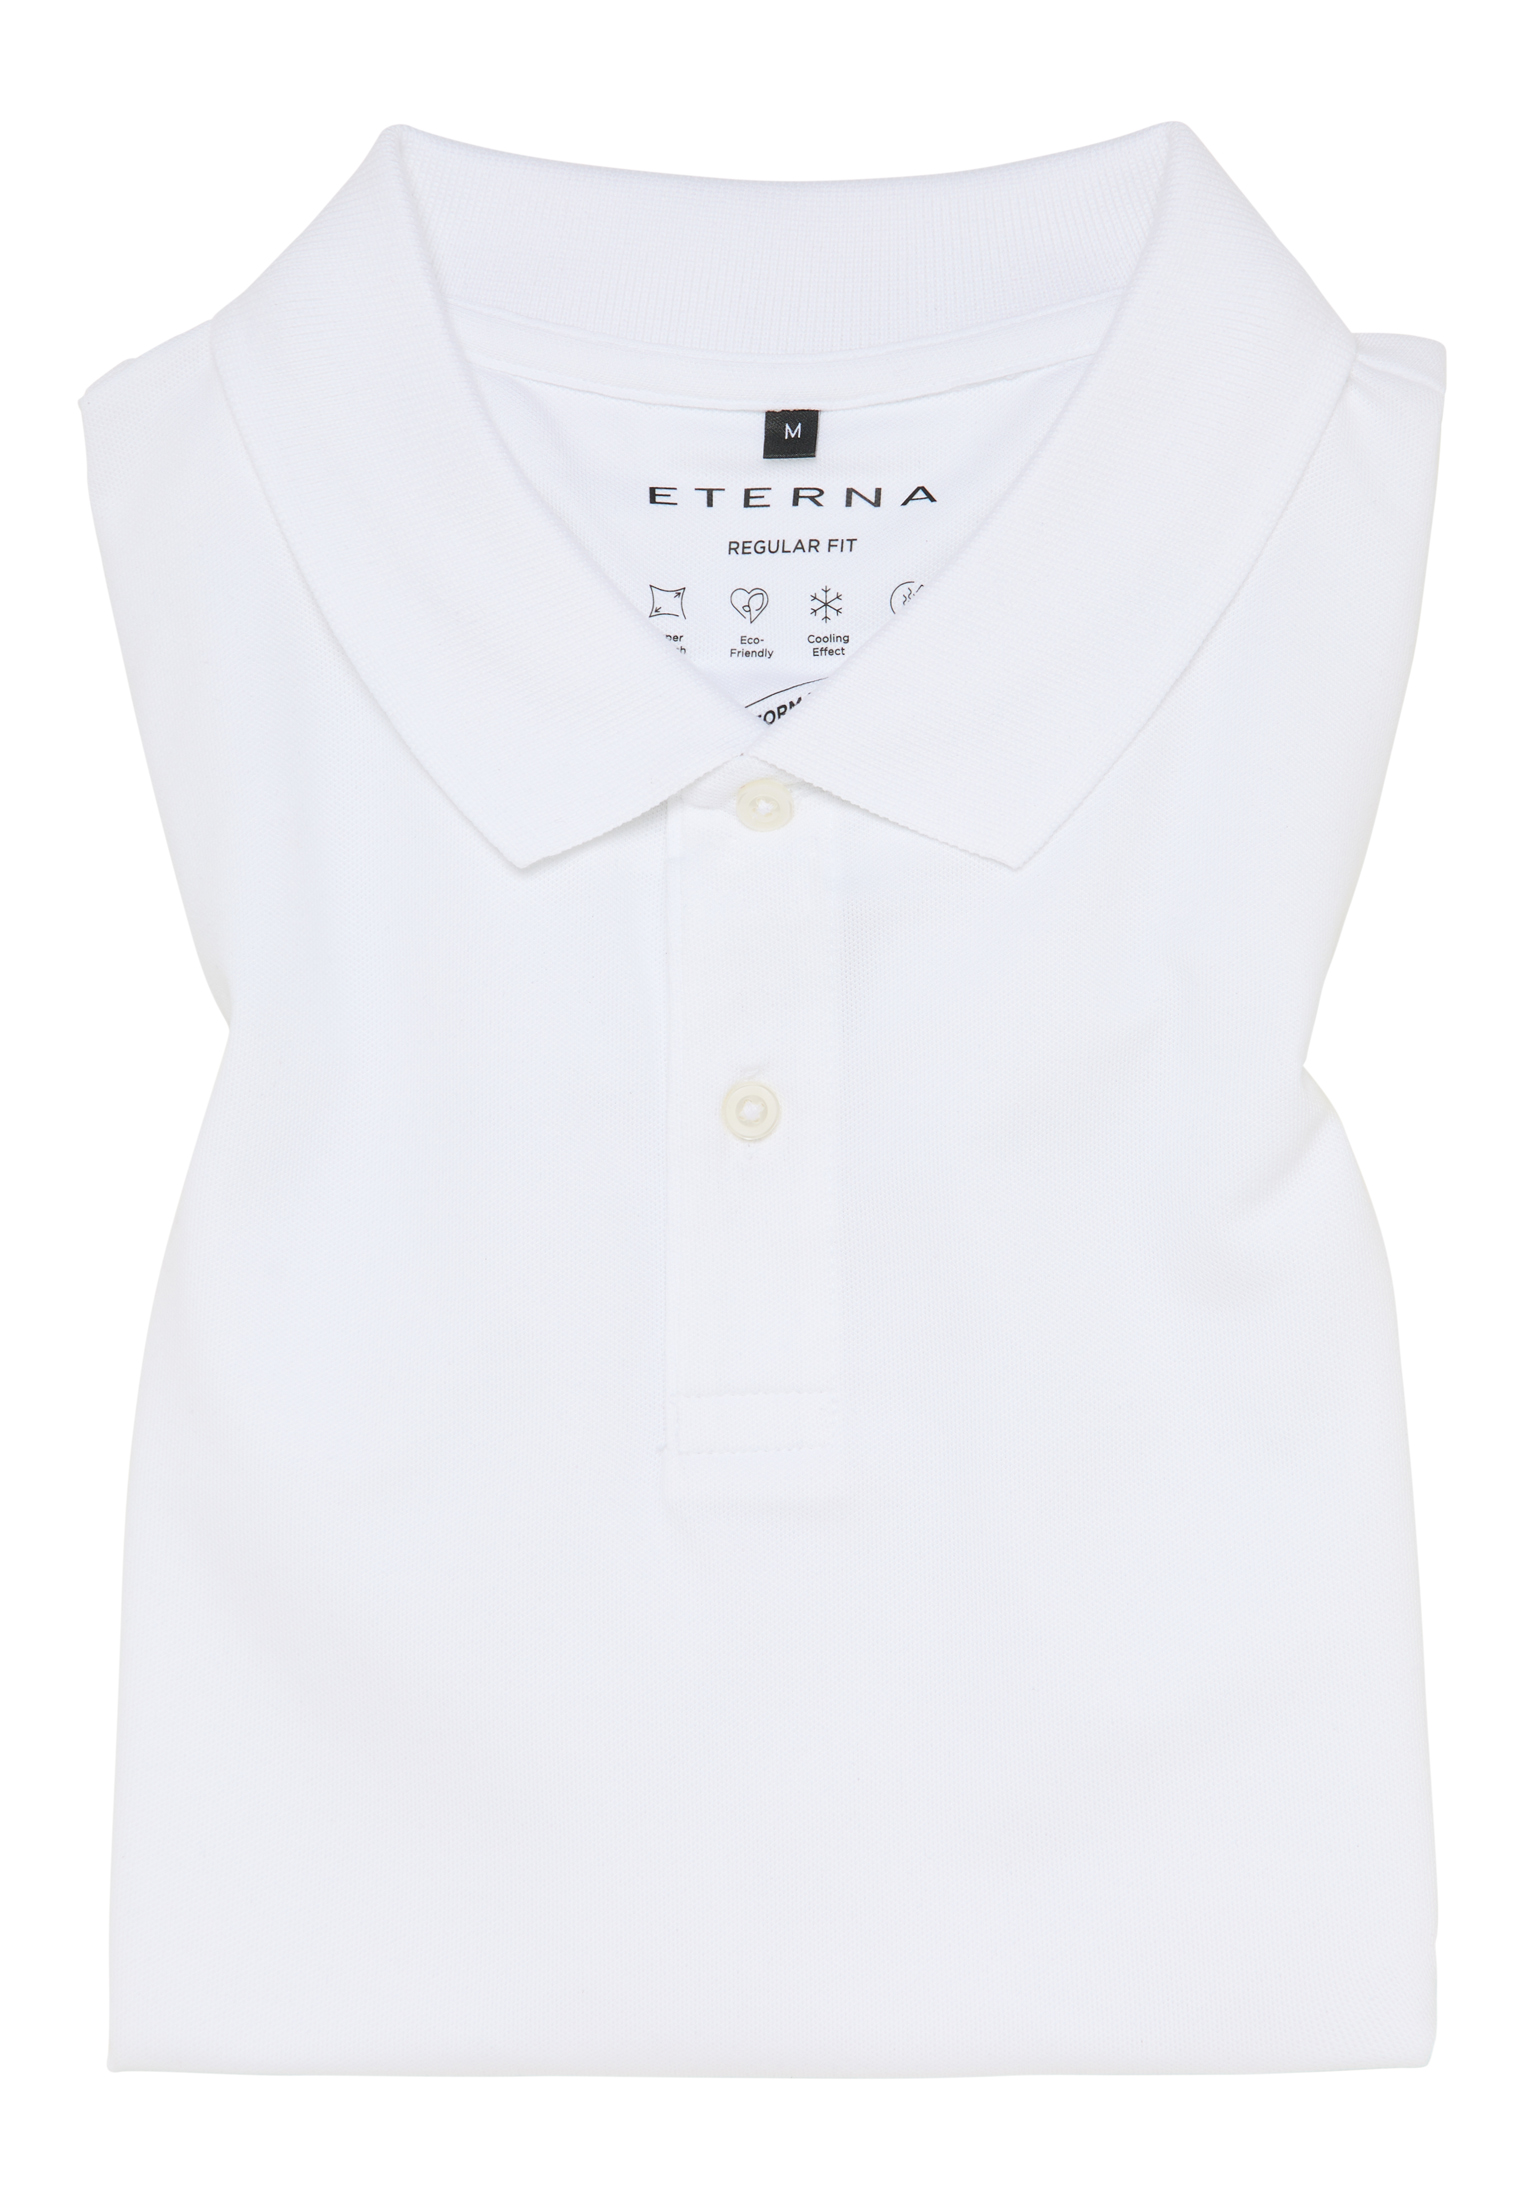 MODERN FIT Polo shirt in white plain | white | 42 | short sleeve |  1SP00175-00-01-42-1/2